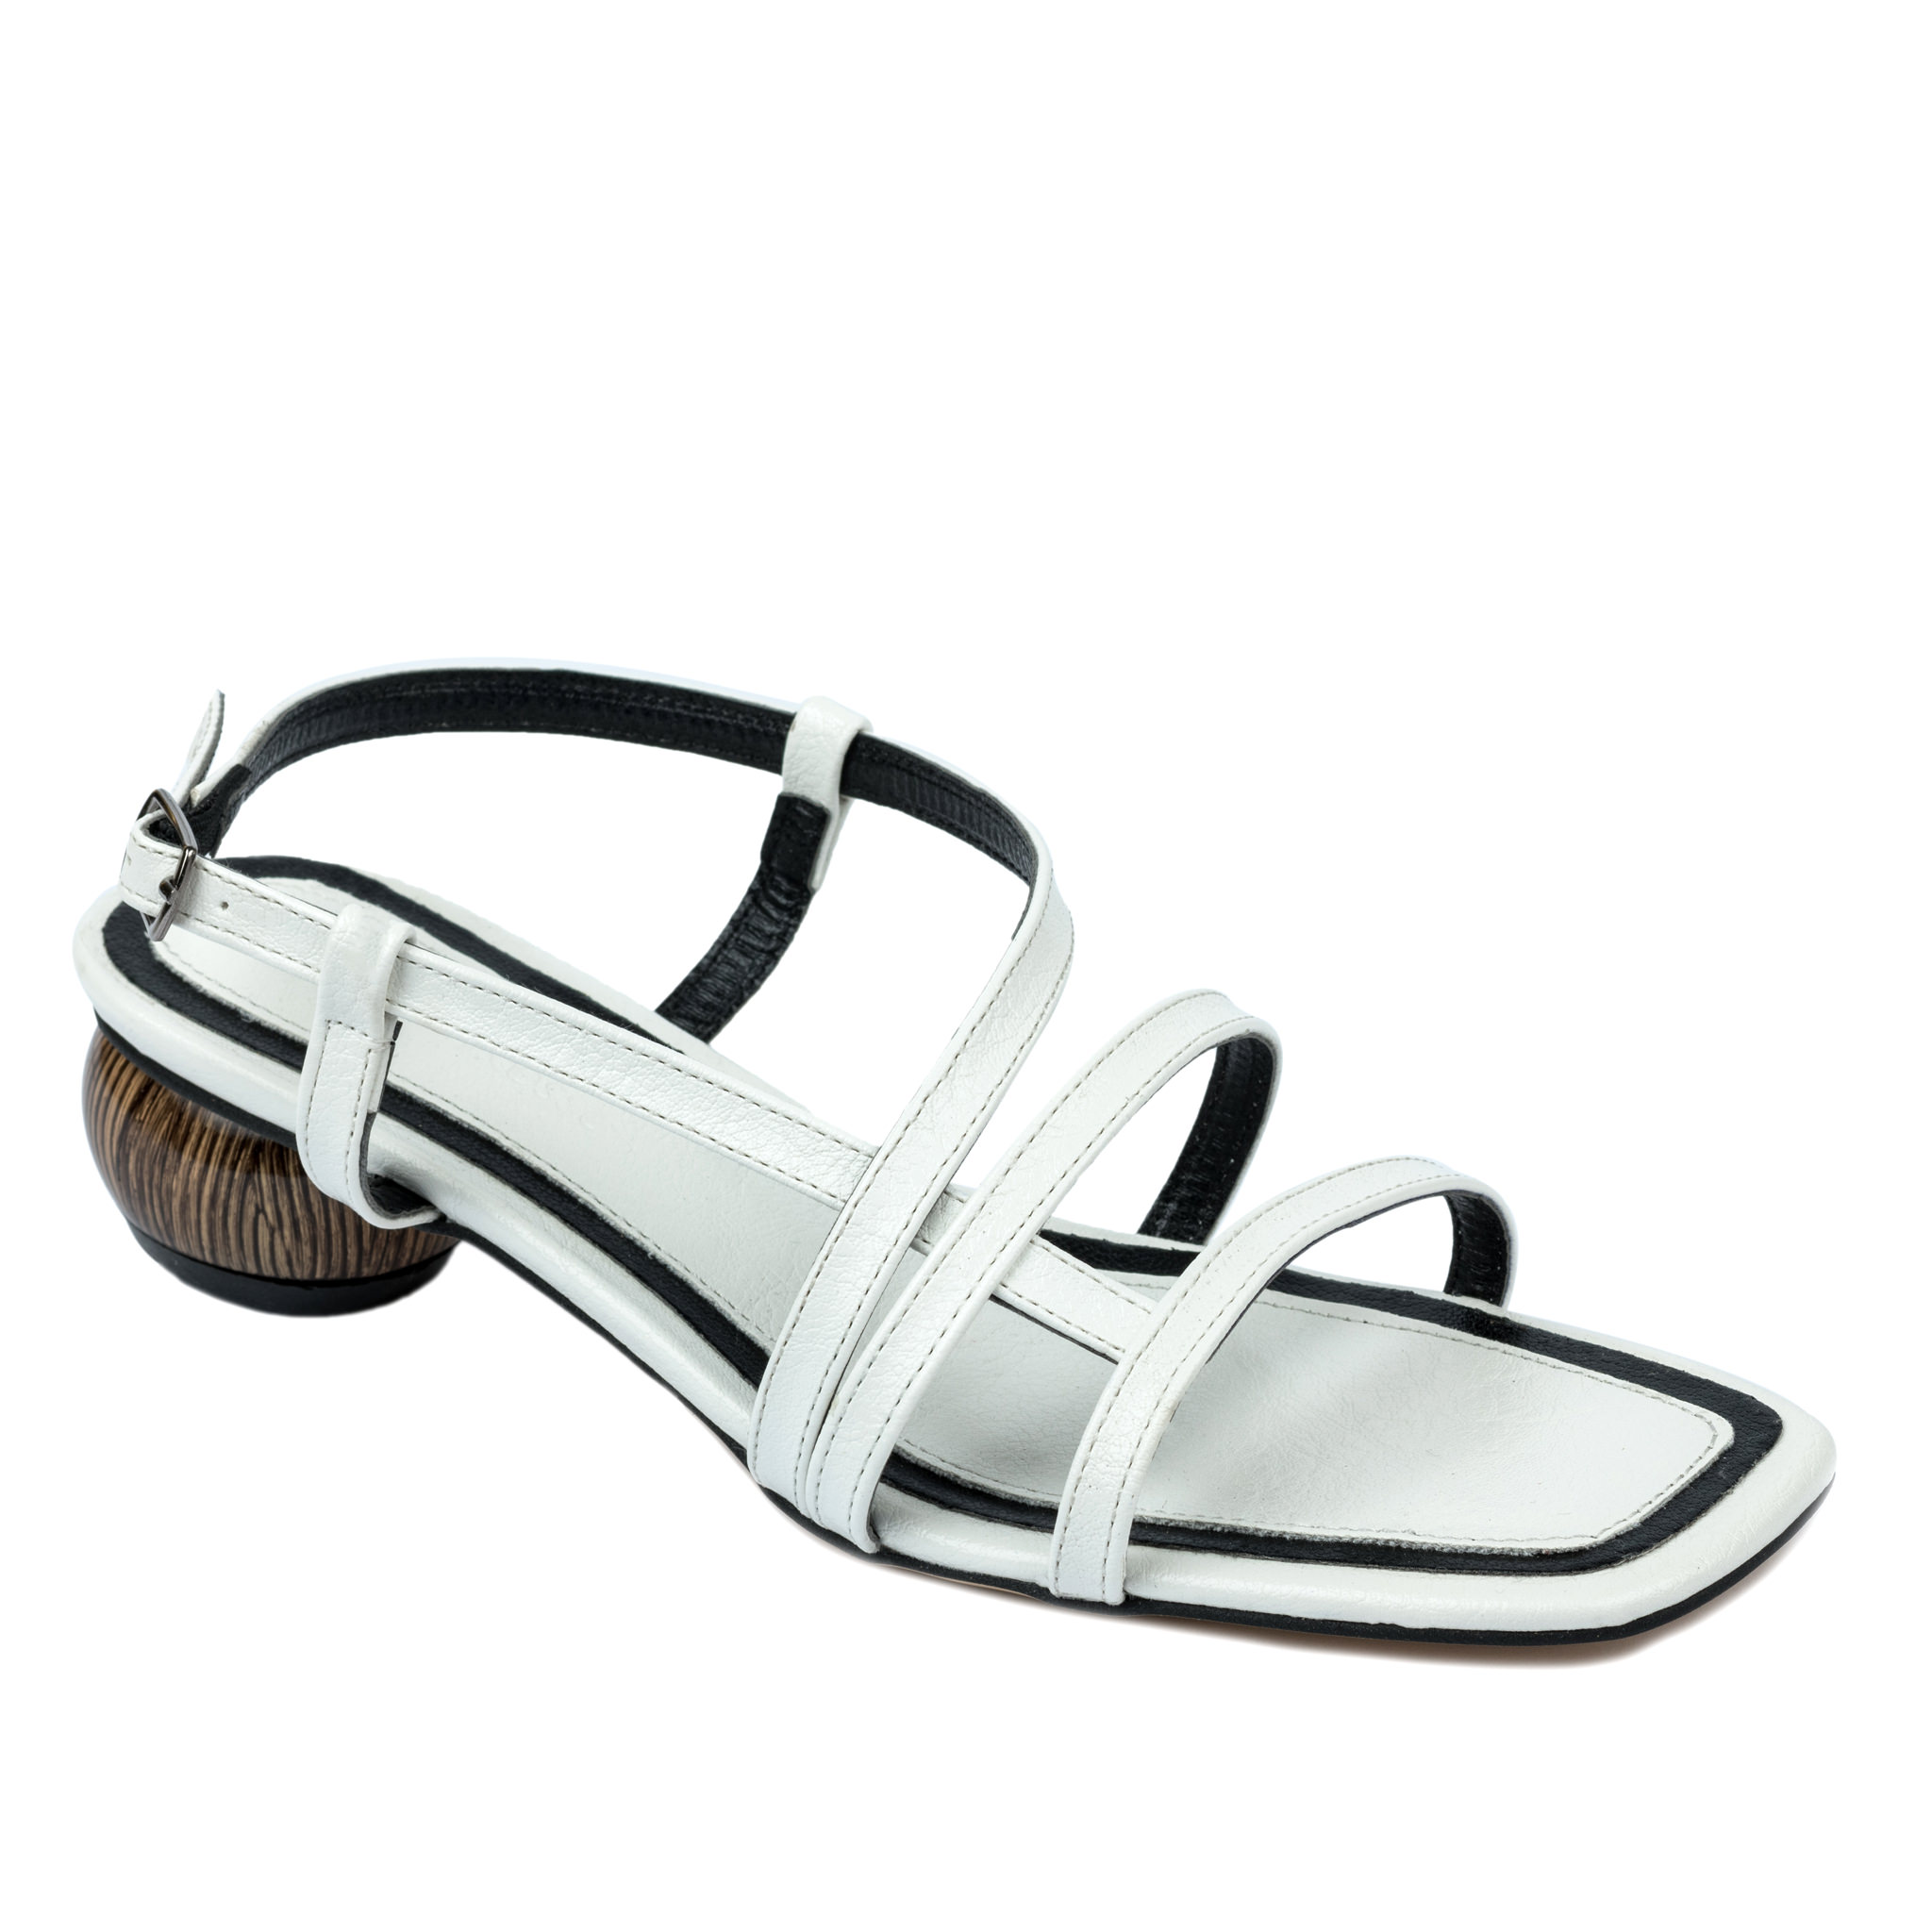 Women sandals A612 - WHITE